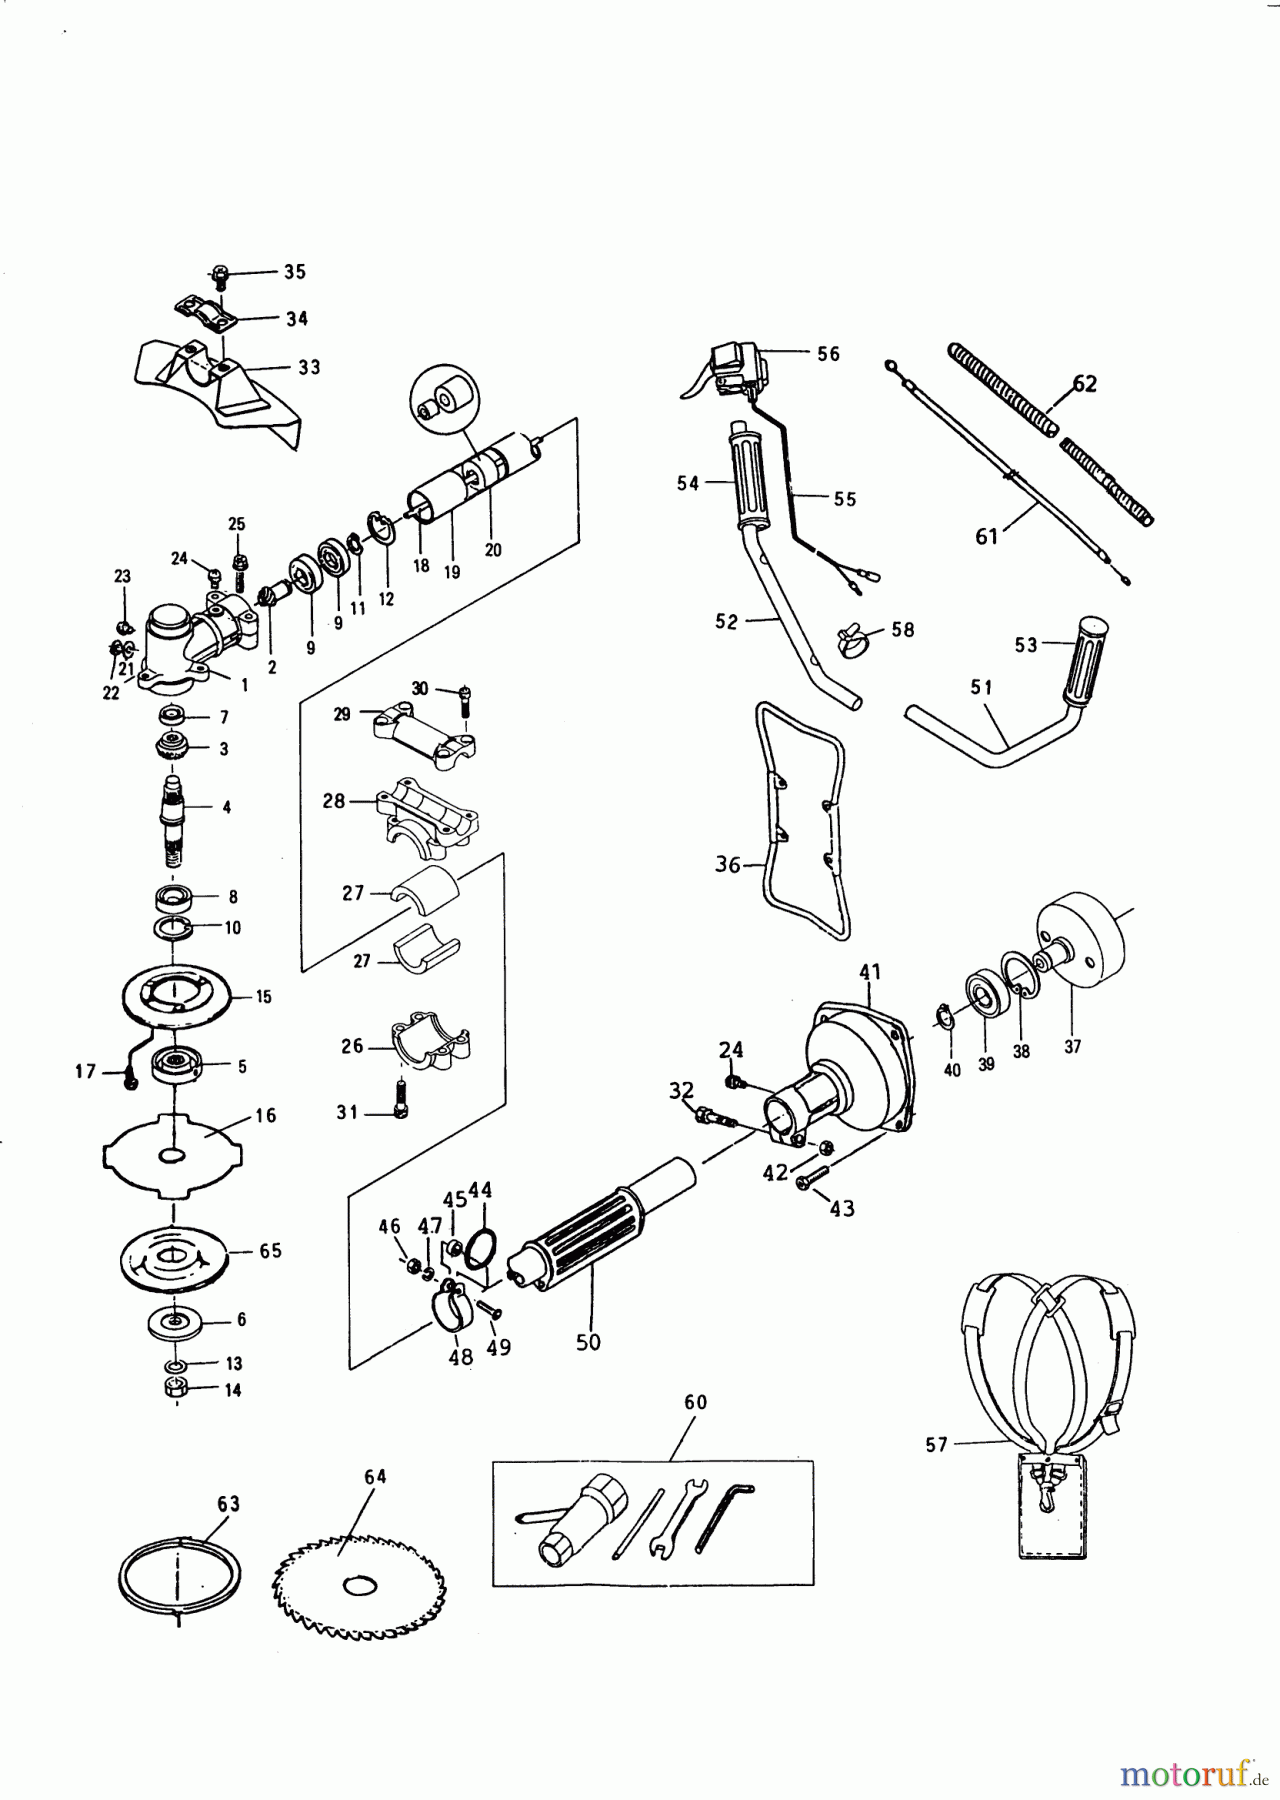  AL-KO Gartentechnik Motorsensen MS 330 Seite 1